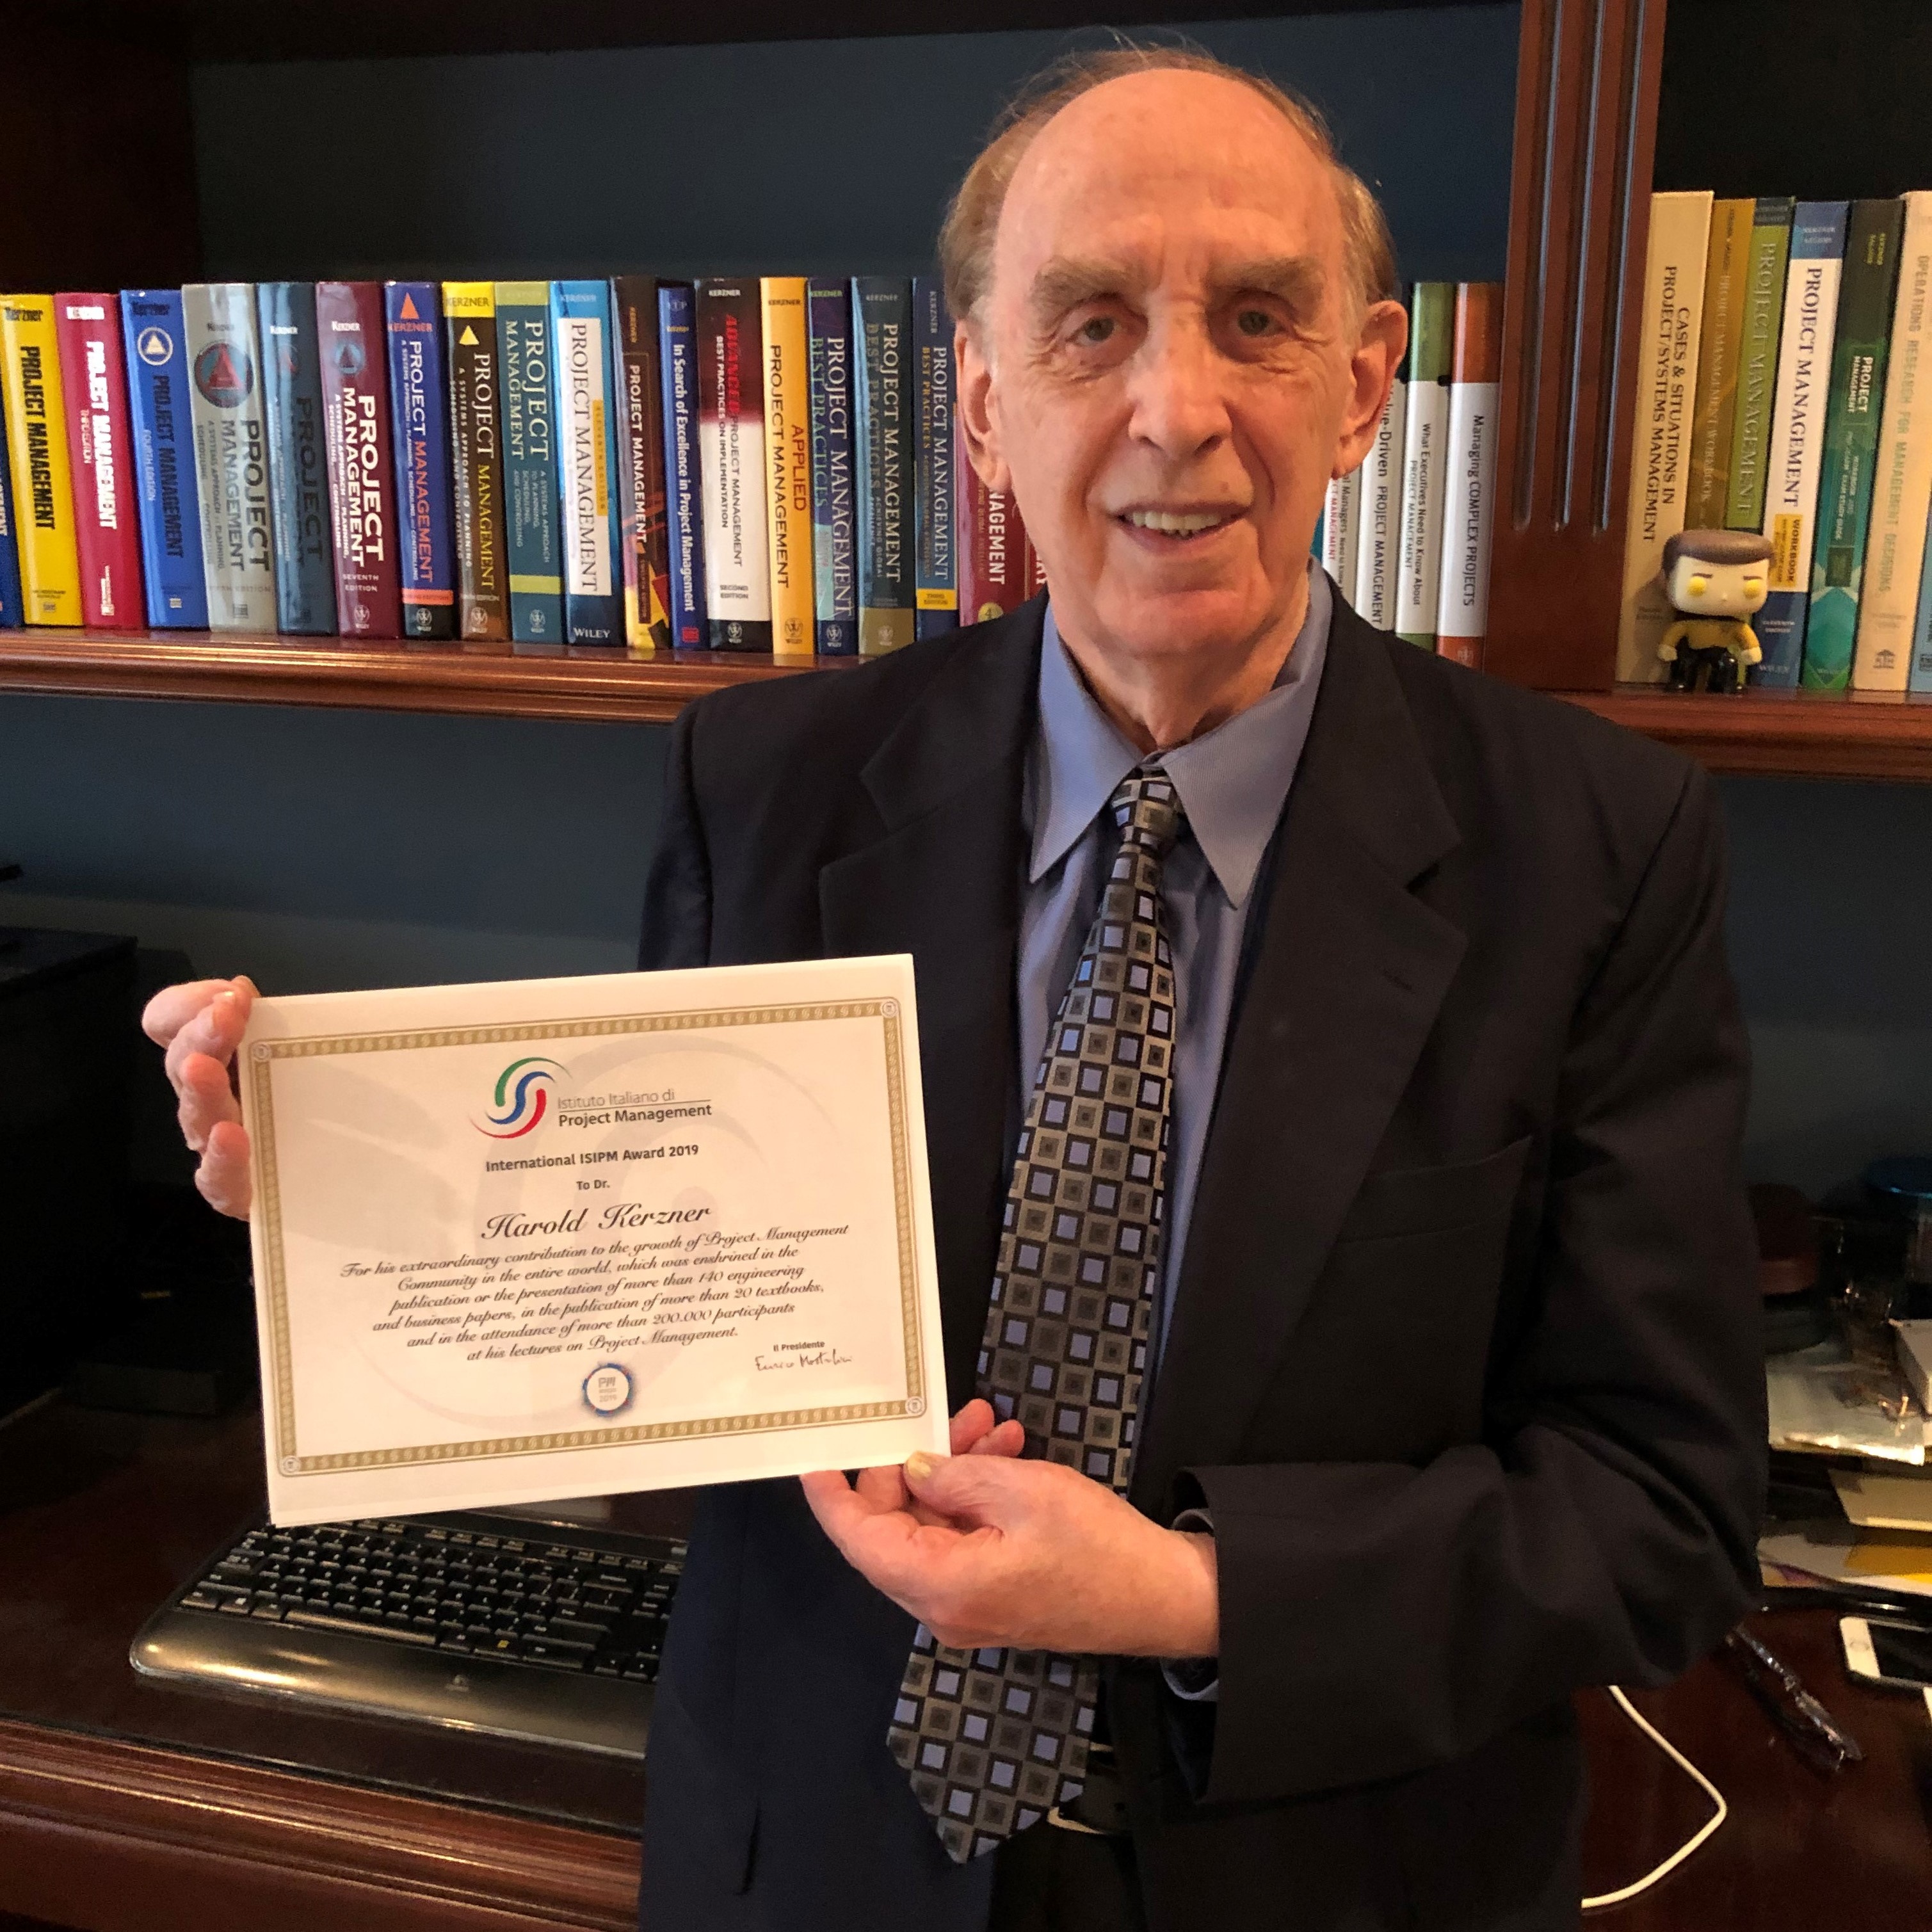 Dr. Harold KerznerInternational ISIPM Award